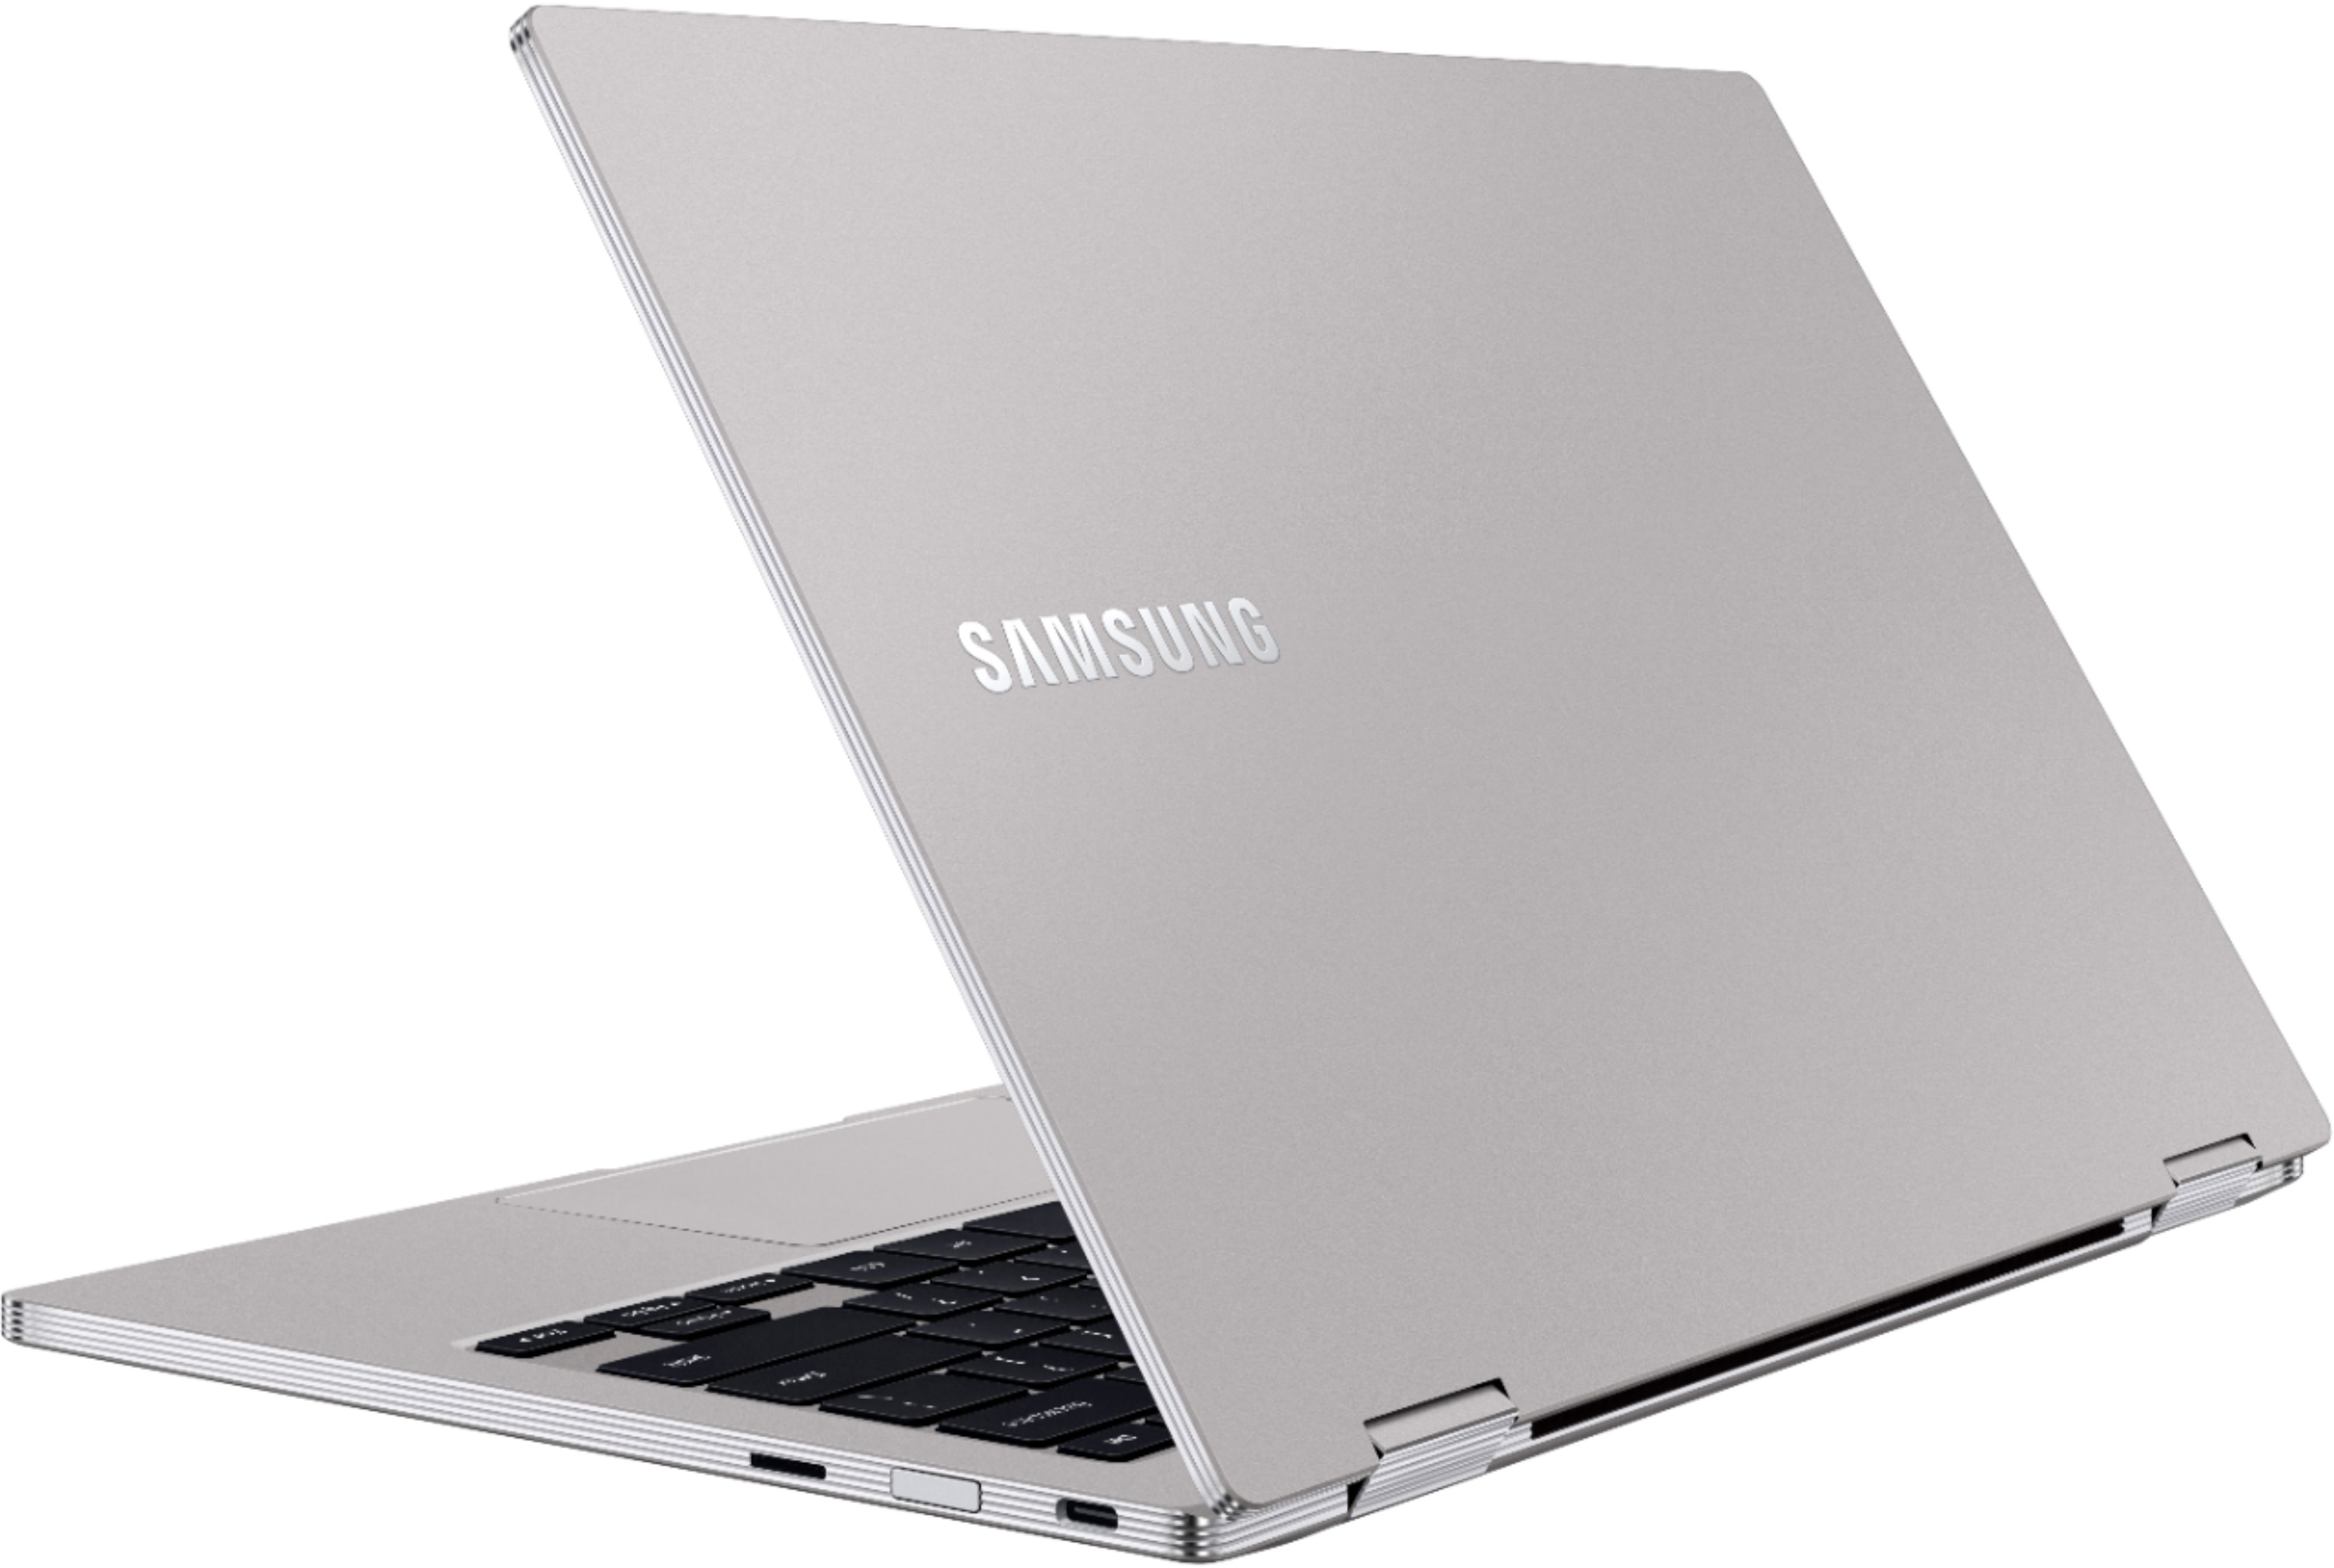 Samsung - Geek Squad Certified Refurbished Series 9 2-in-1 13.3" Touch-Screen Laptop - Intel Core i7 - 8GB - 256GB SSD - Platinum Titan